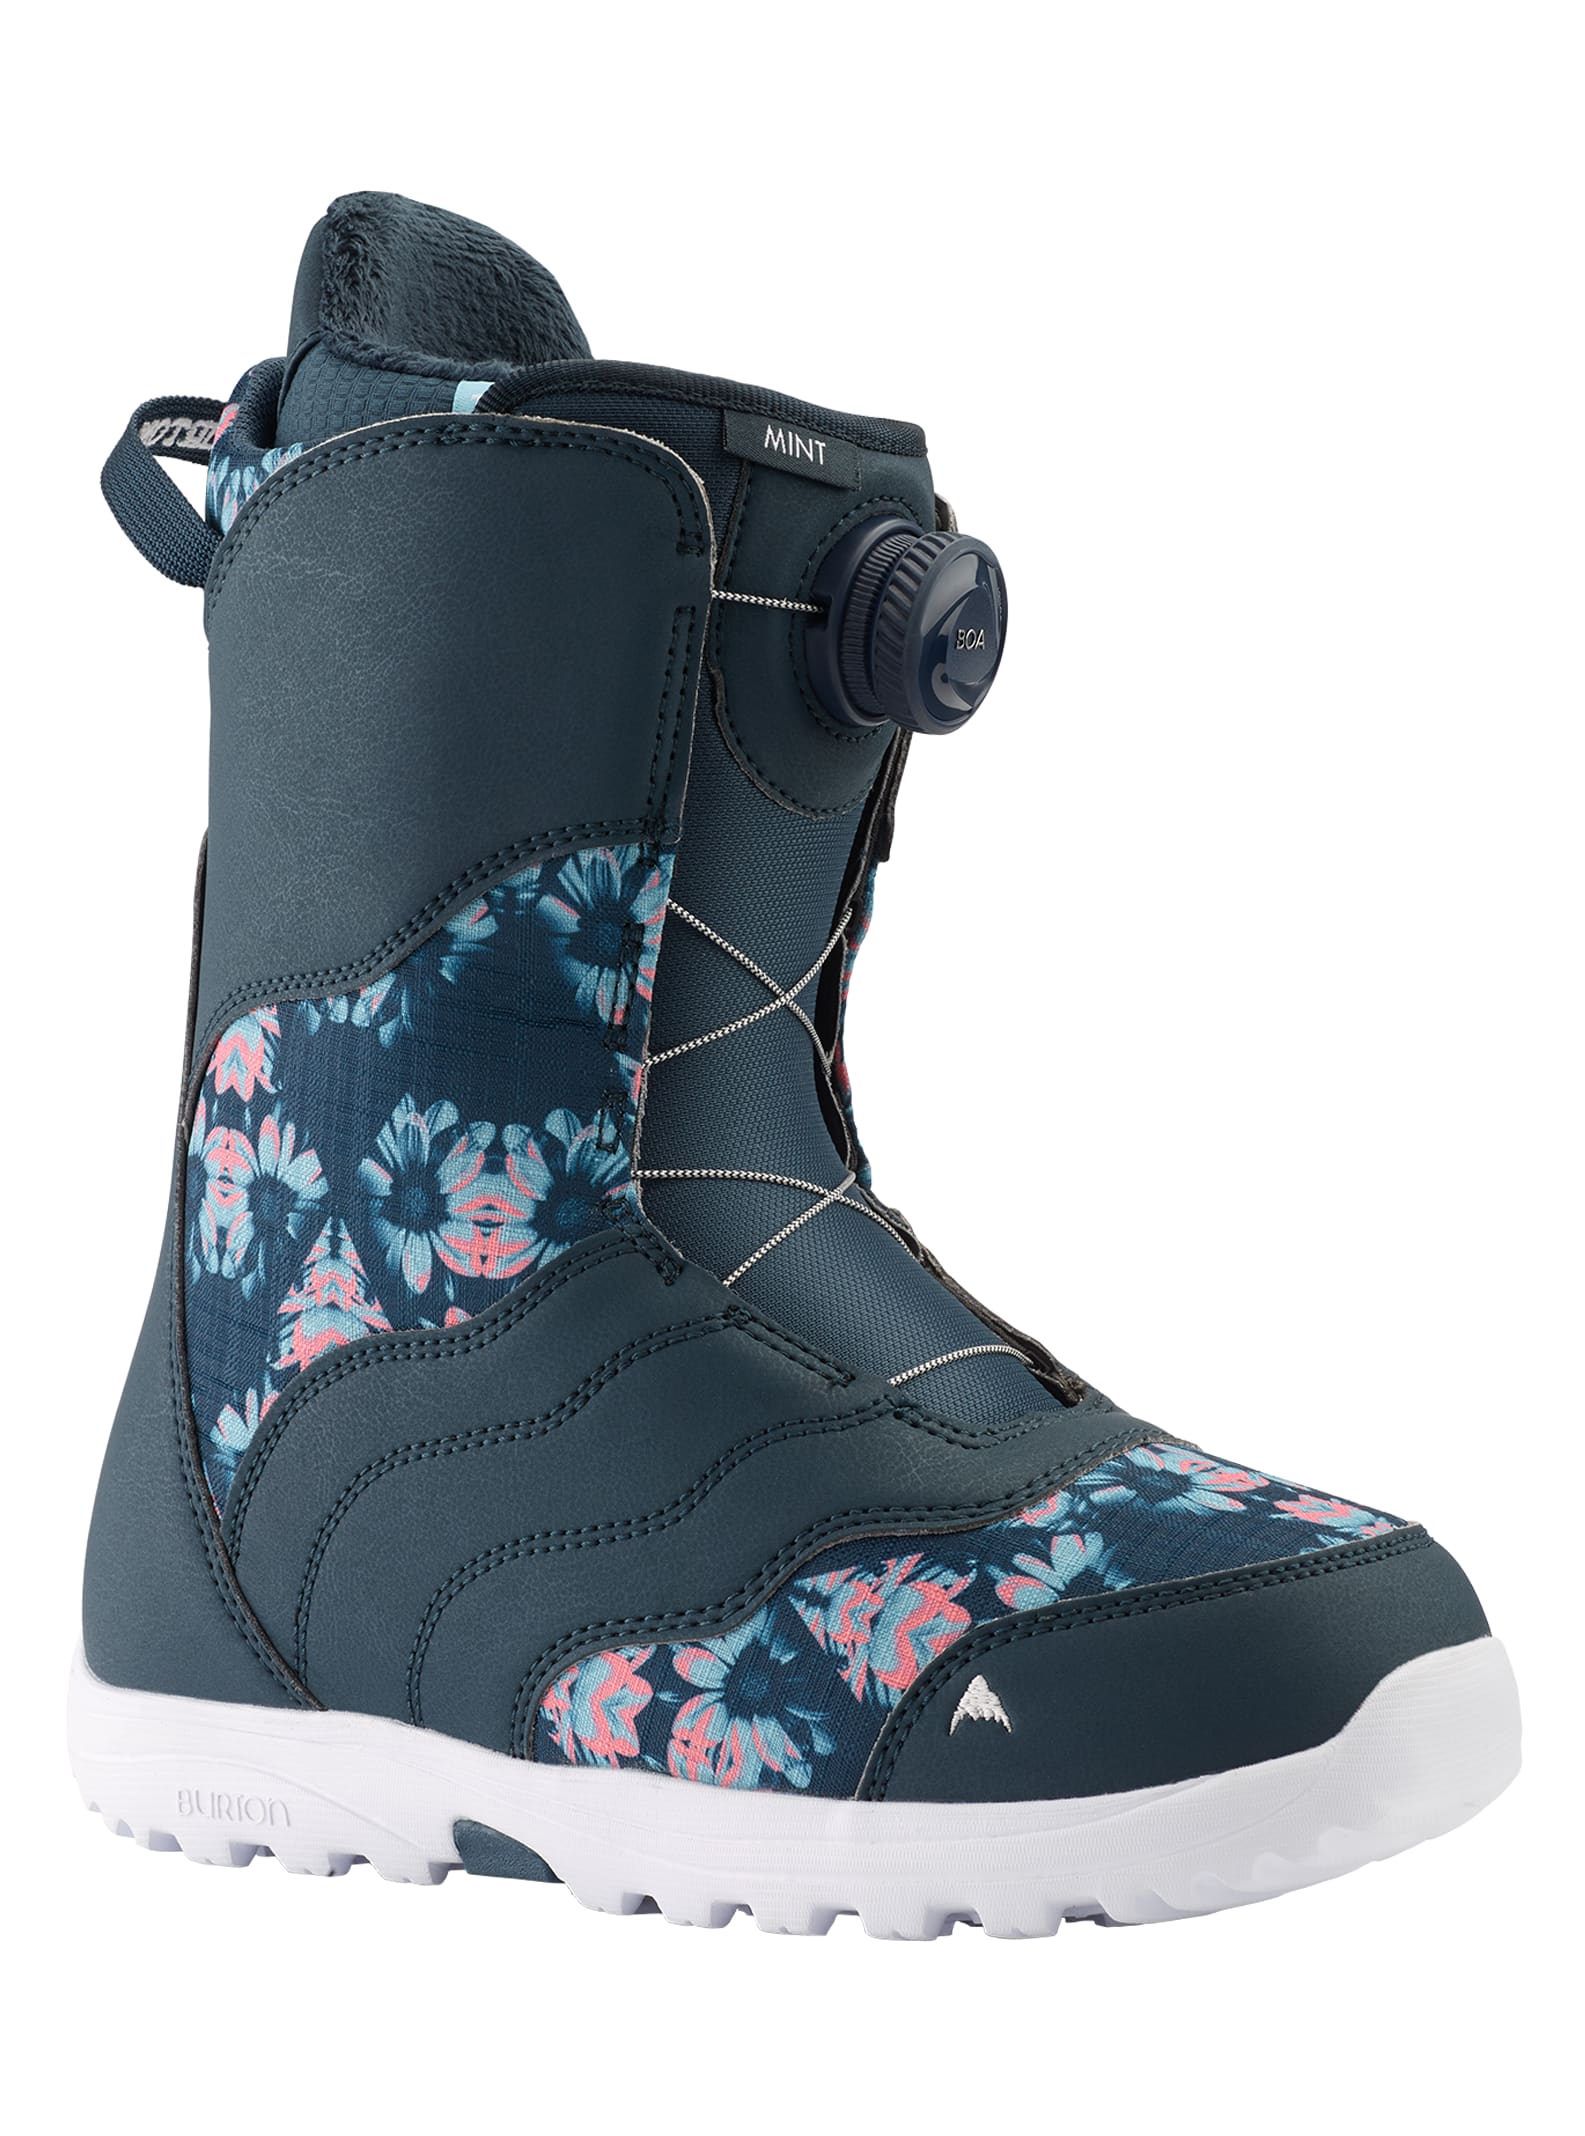 Burton - Boots de snowboard Mint Boa® femme, Midnite Blue / Multi, 10